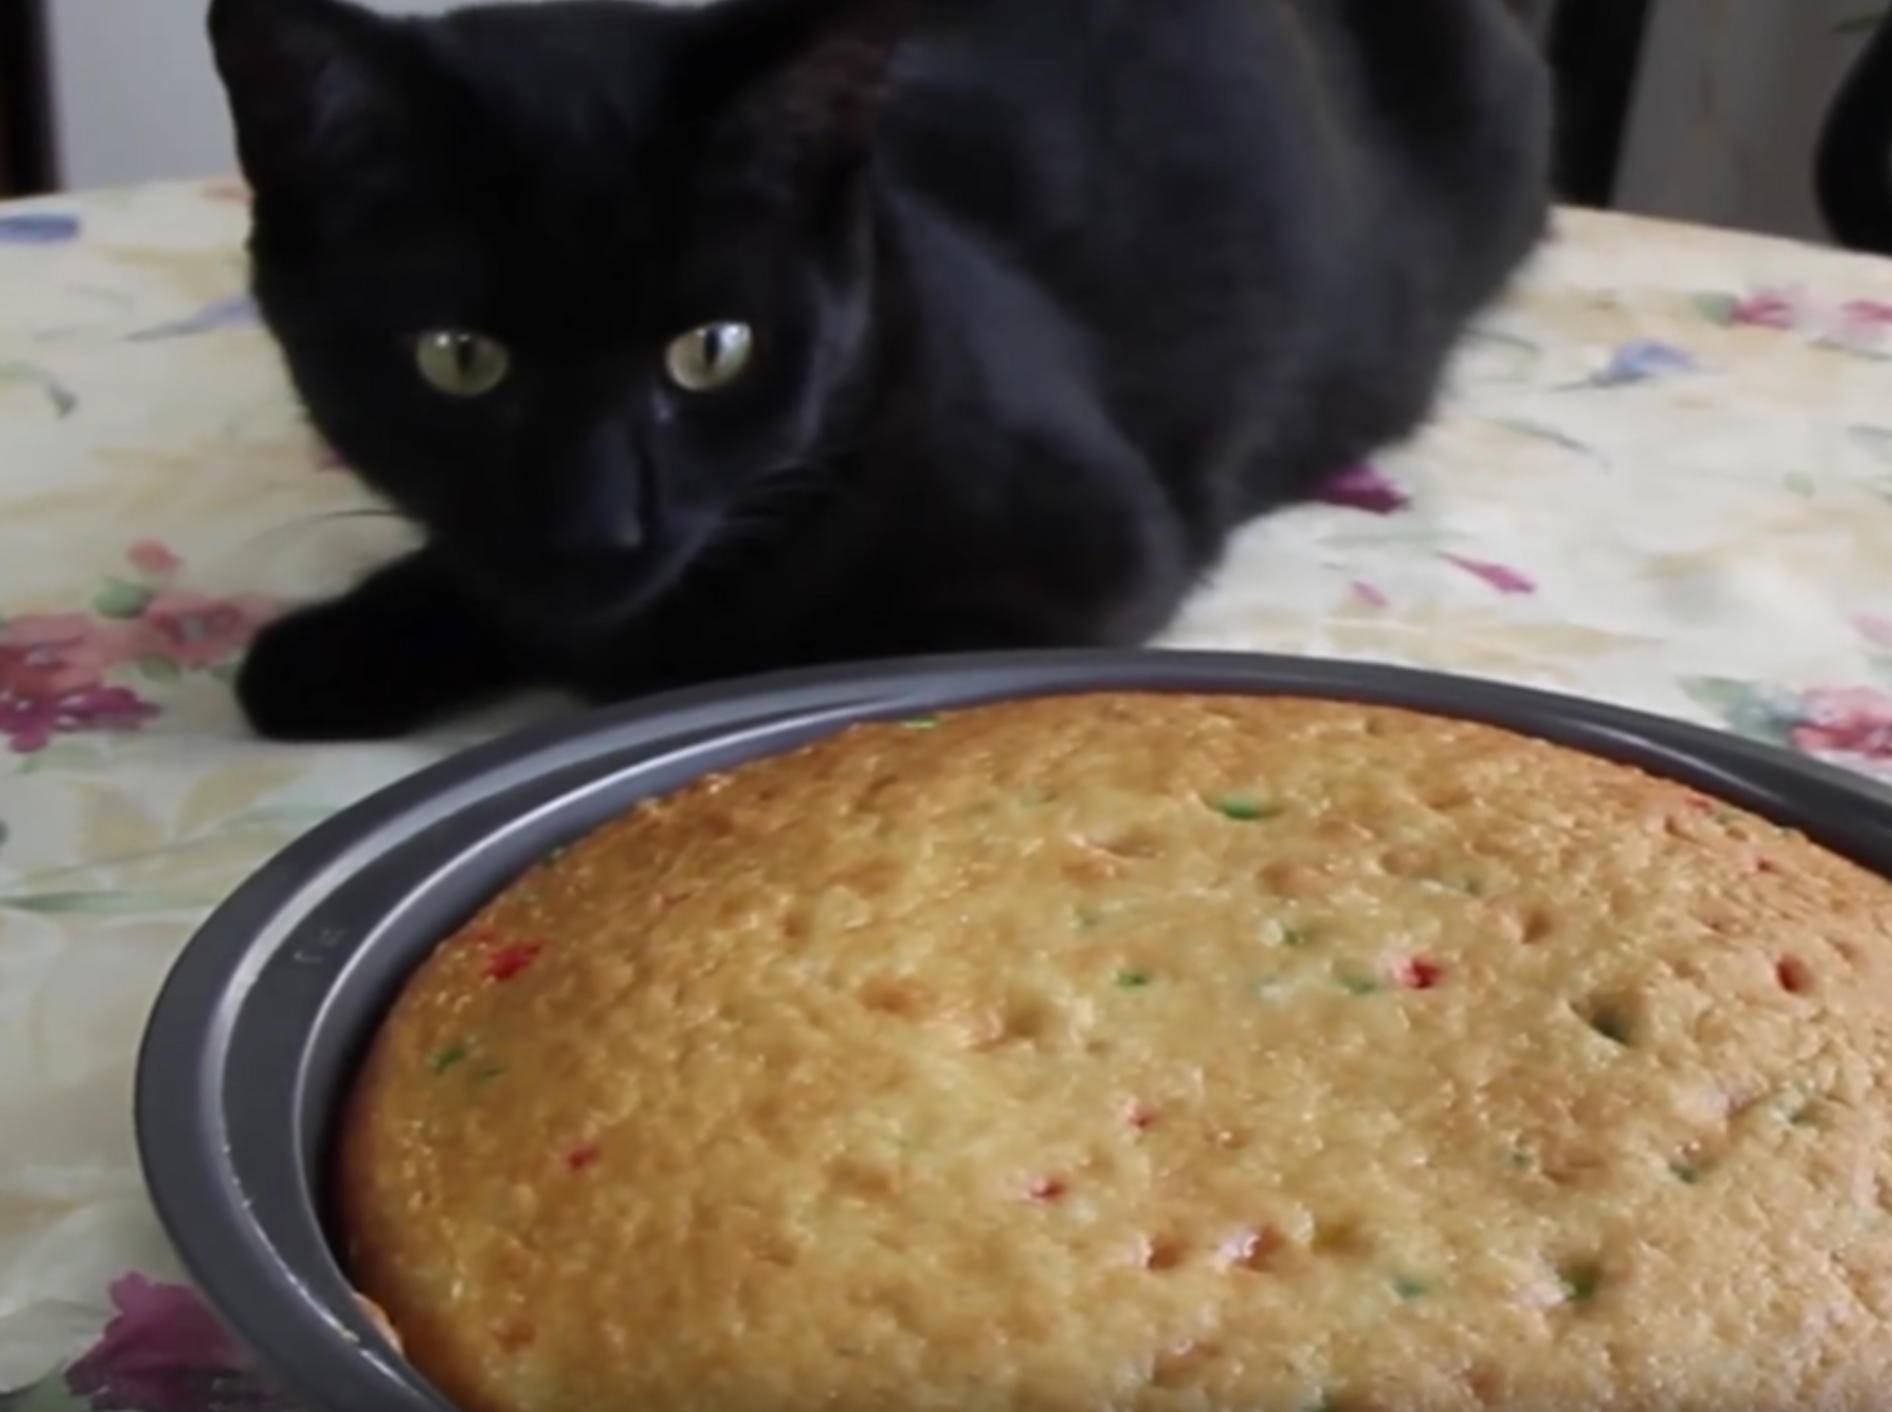 "Nimm das, du süßes Gebäck!": Katze ruiniert Kuchen – YouTube / Kitty Cat Bliss